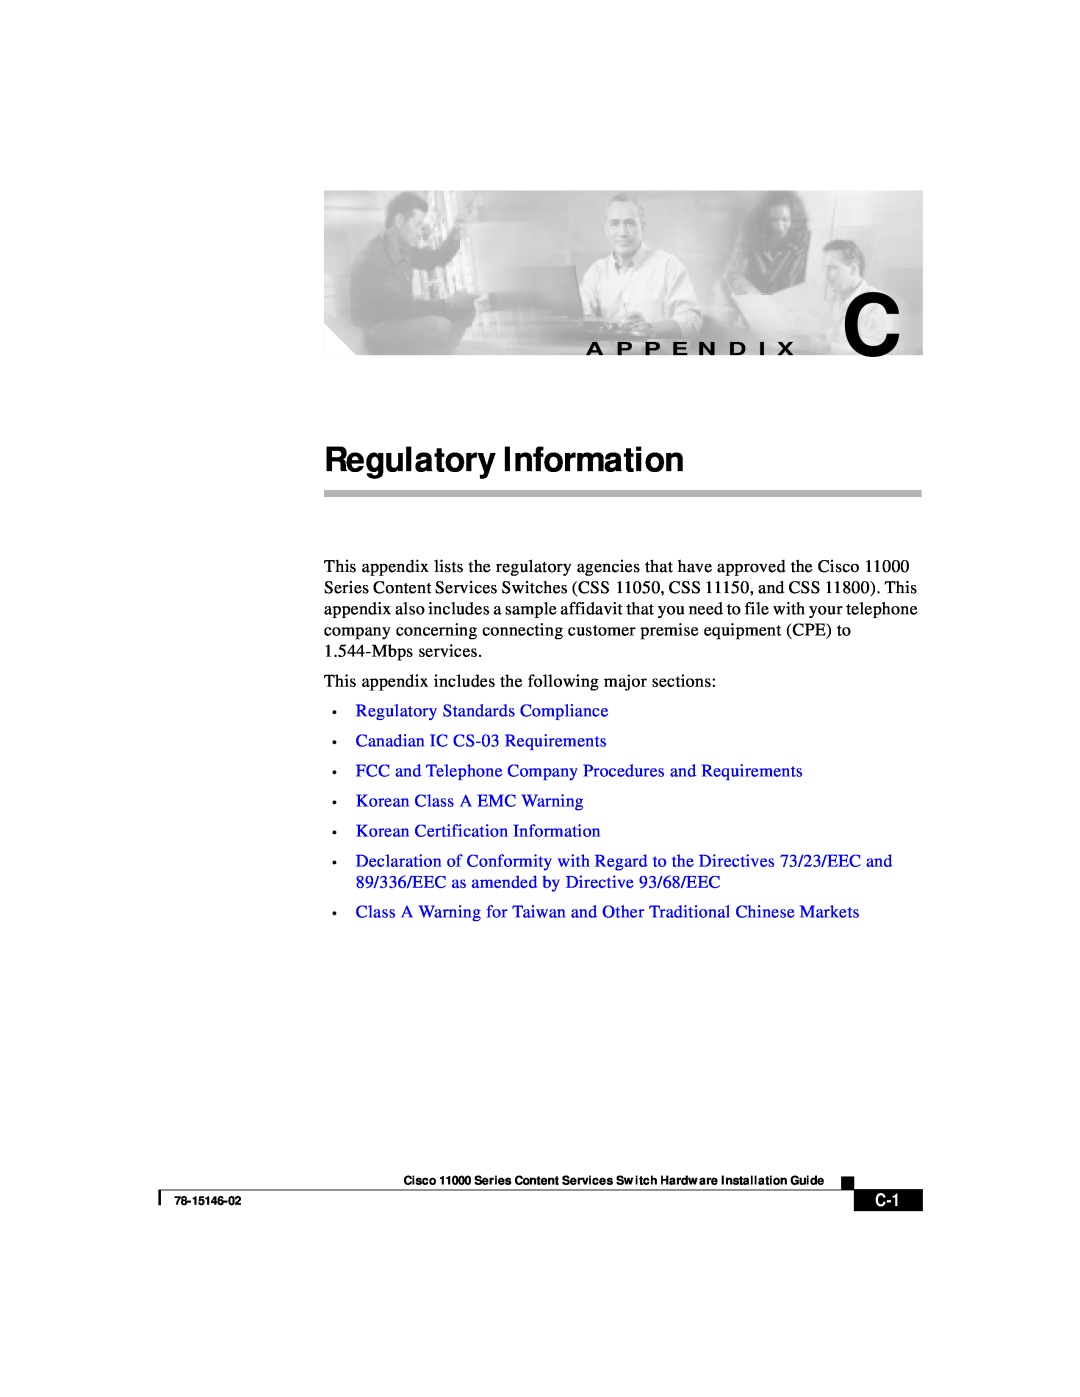 Cisco Systems 11000 Series manual Regulatory Information, A P P E N D I X C 